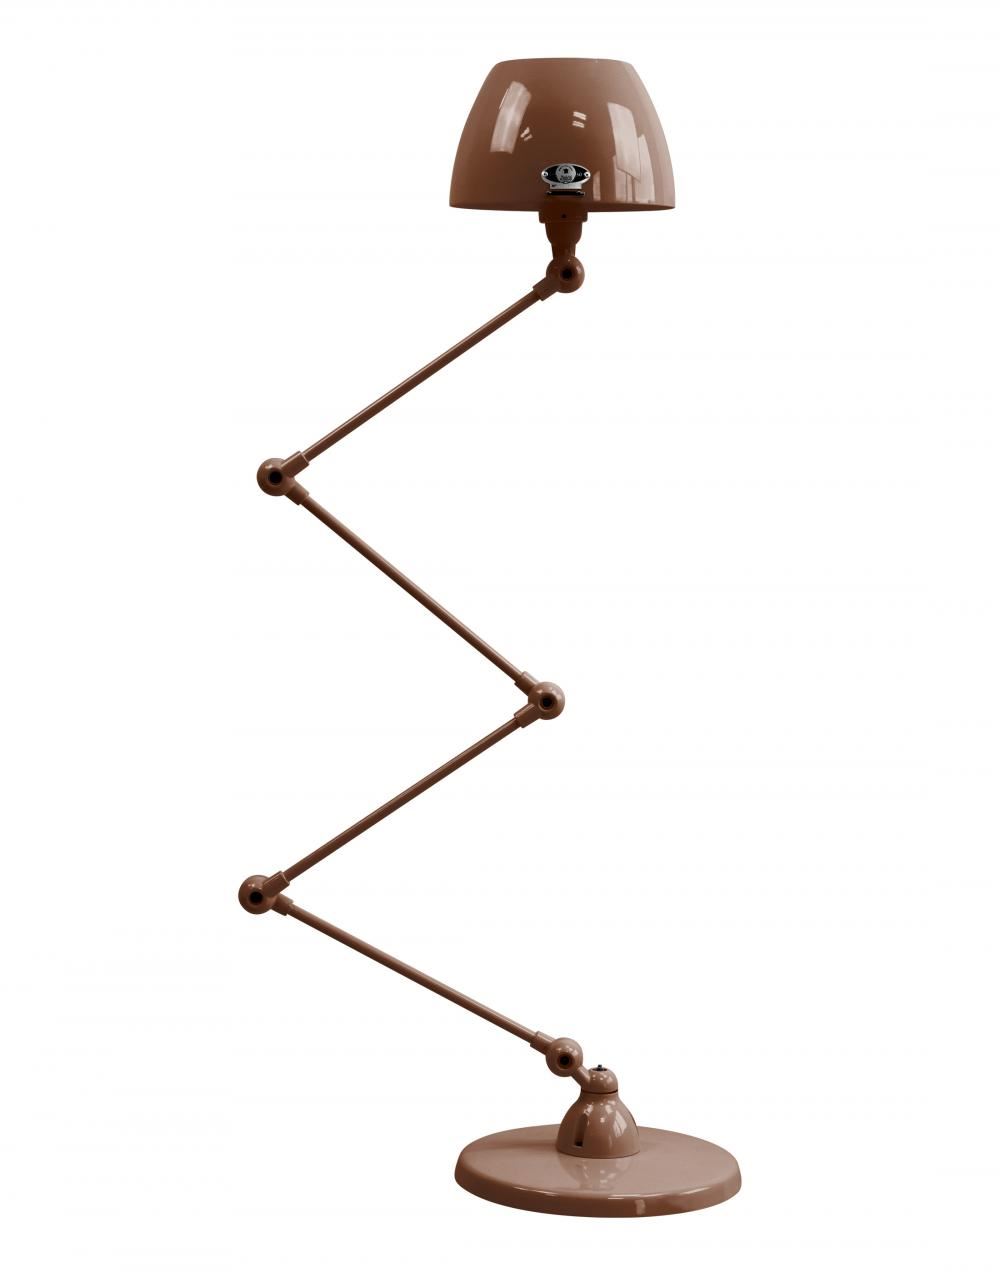 Jielde Aicler Zigzag 4 Arm Desk Or Floor Light Curved Shade Chocolate Matt